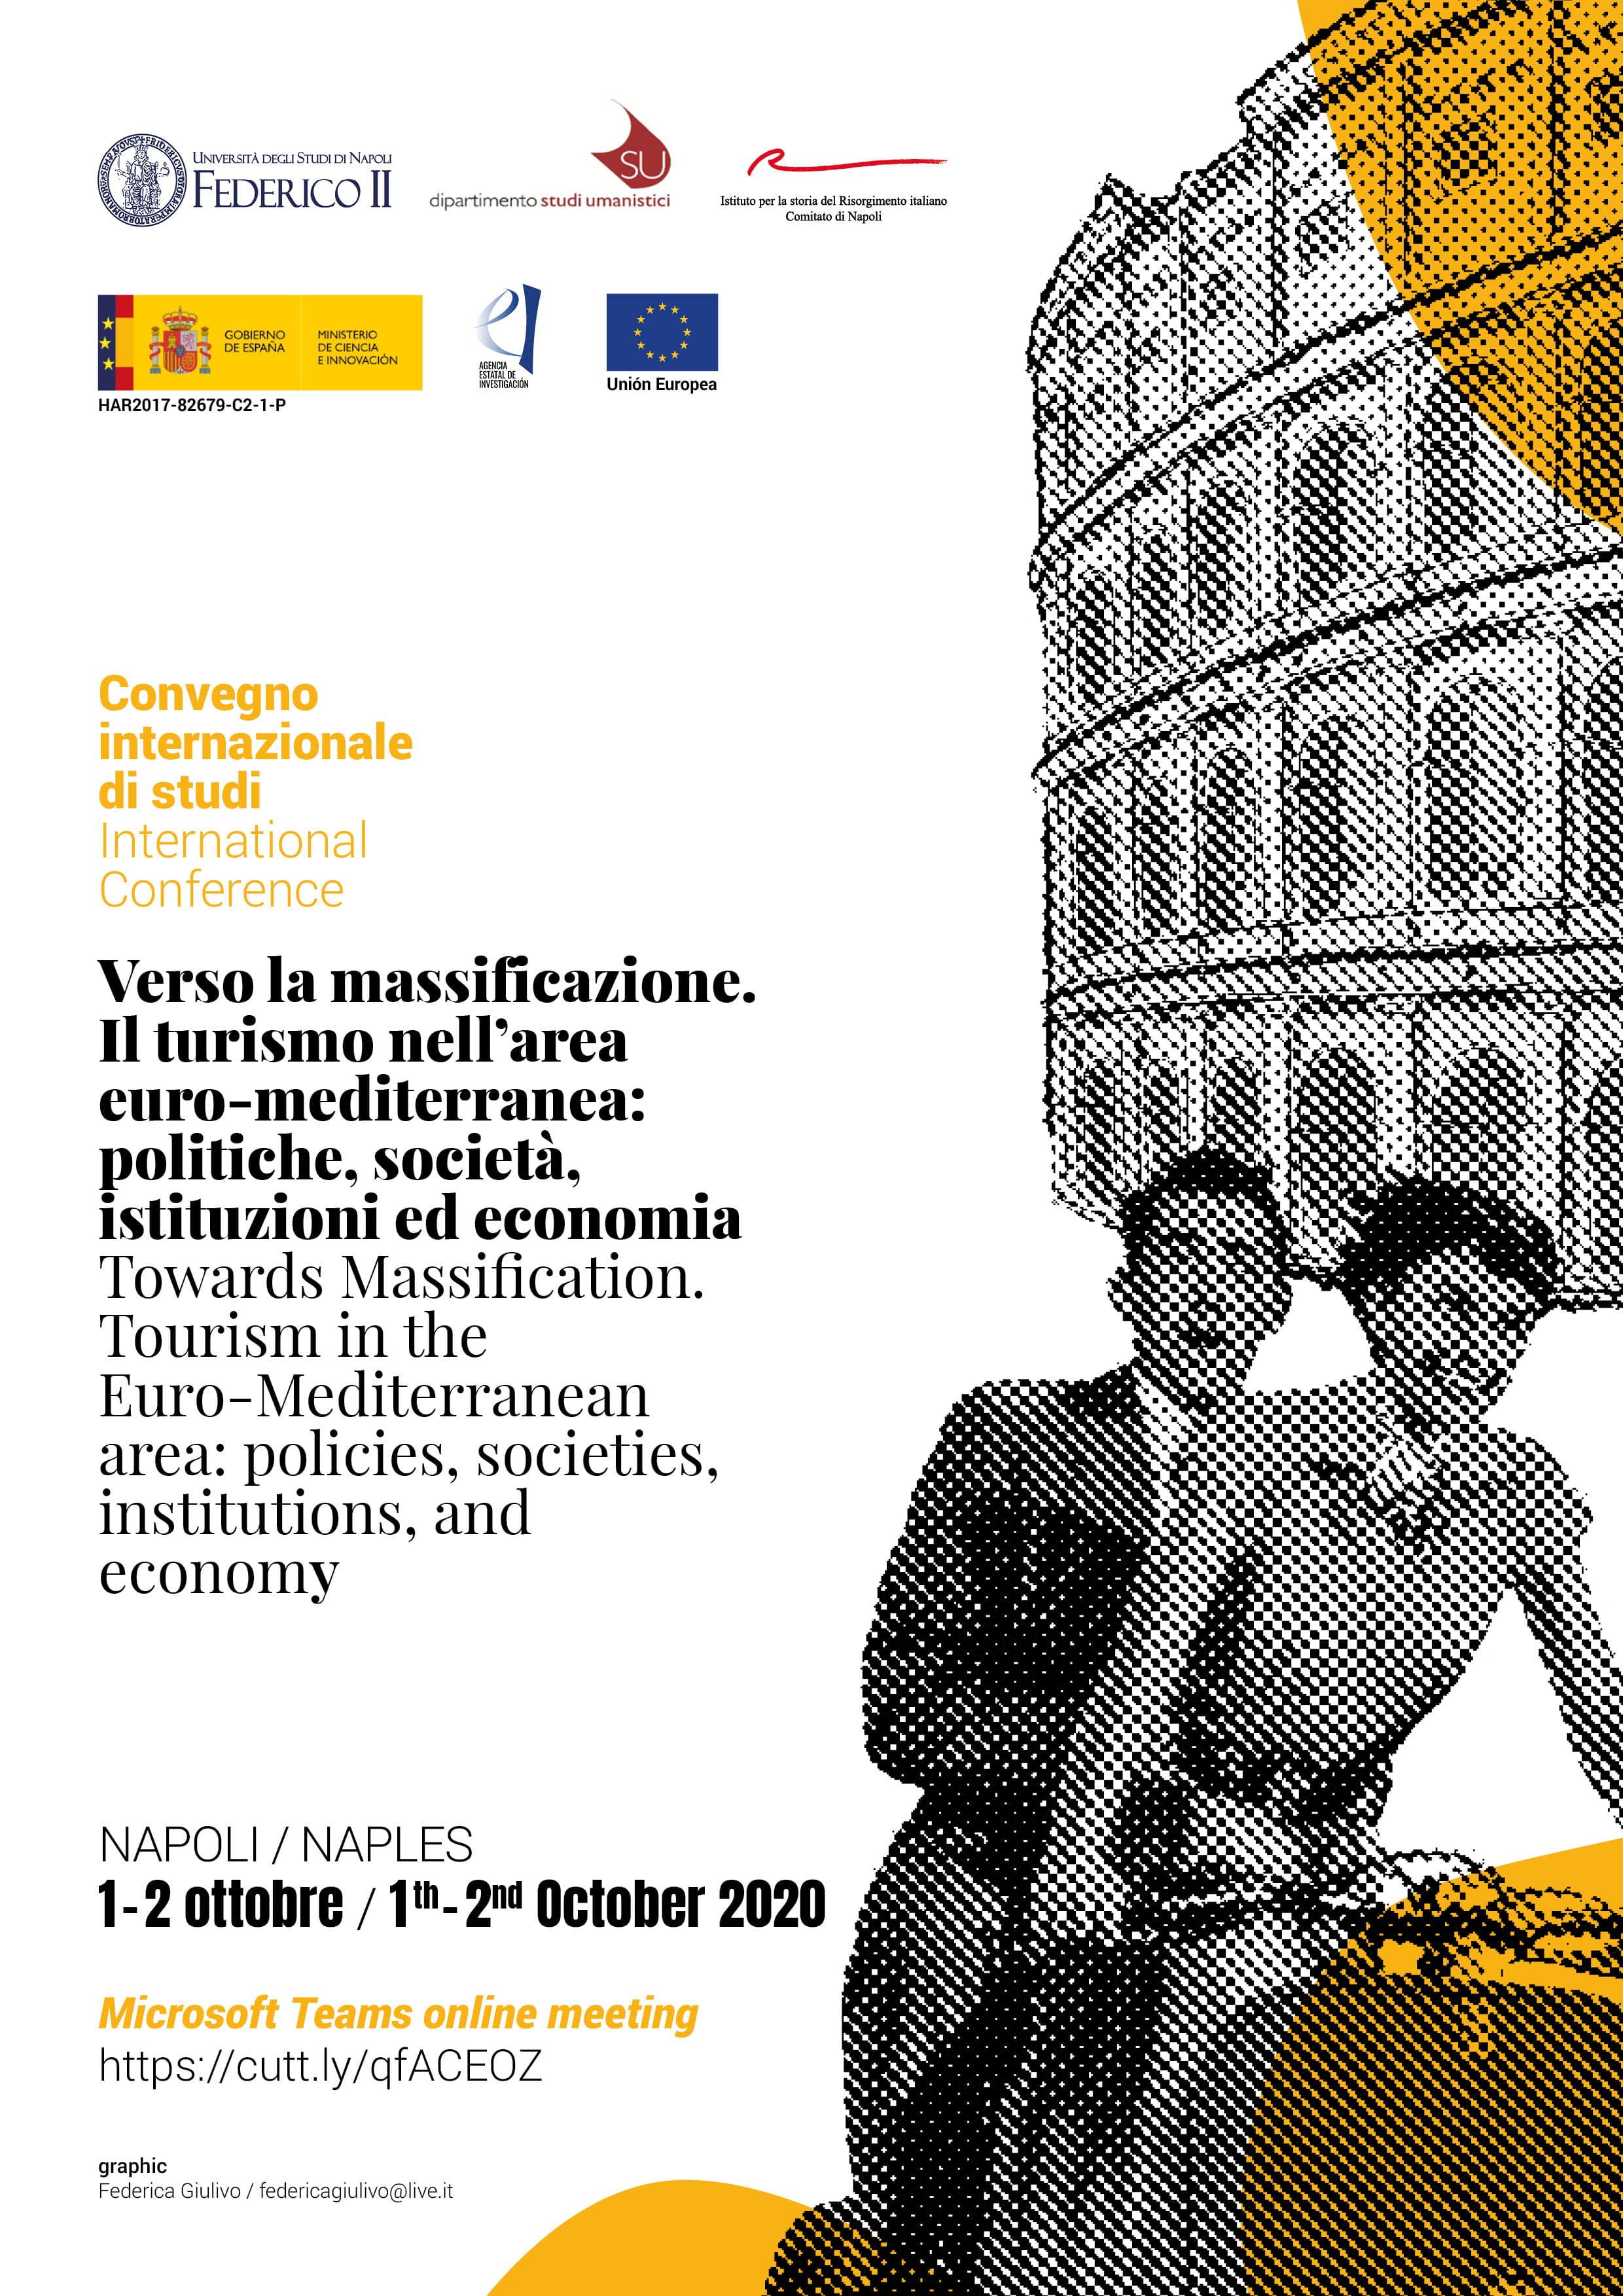 licrpc-participa-en-el-congres-internacional-verso-la-massificazione-il-turismo-nellarea-euro-mediterranea